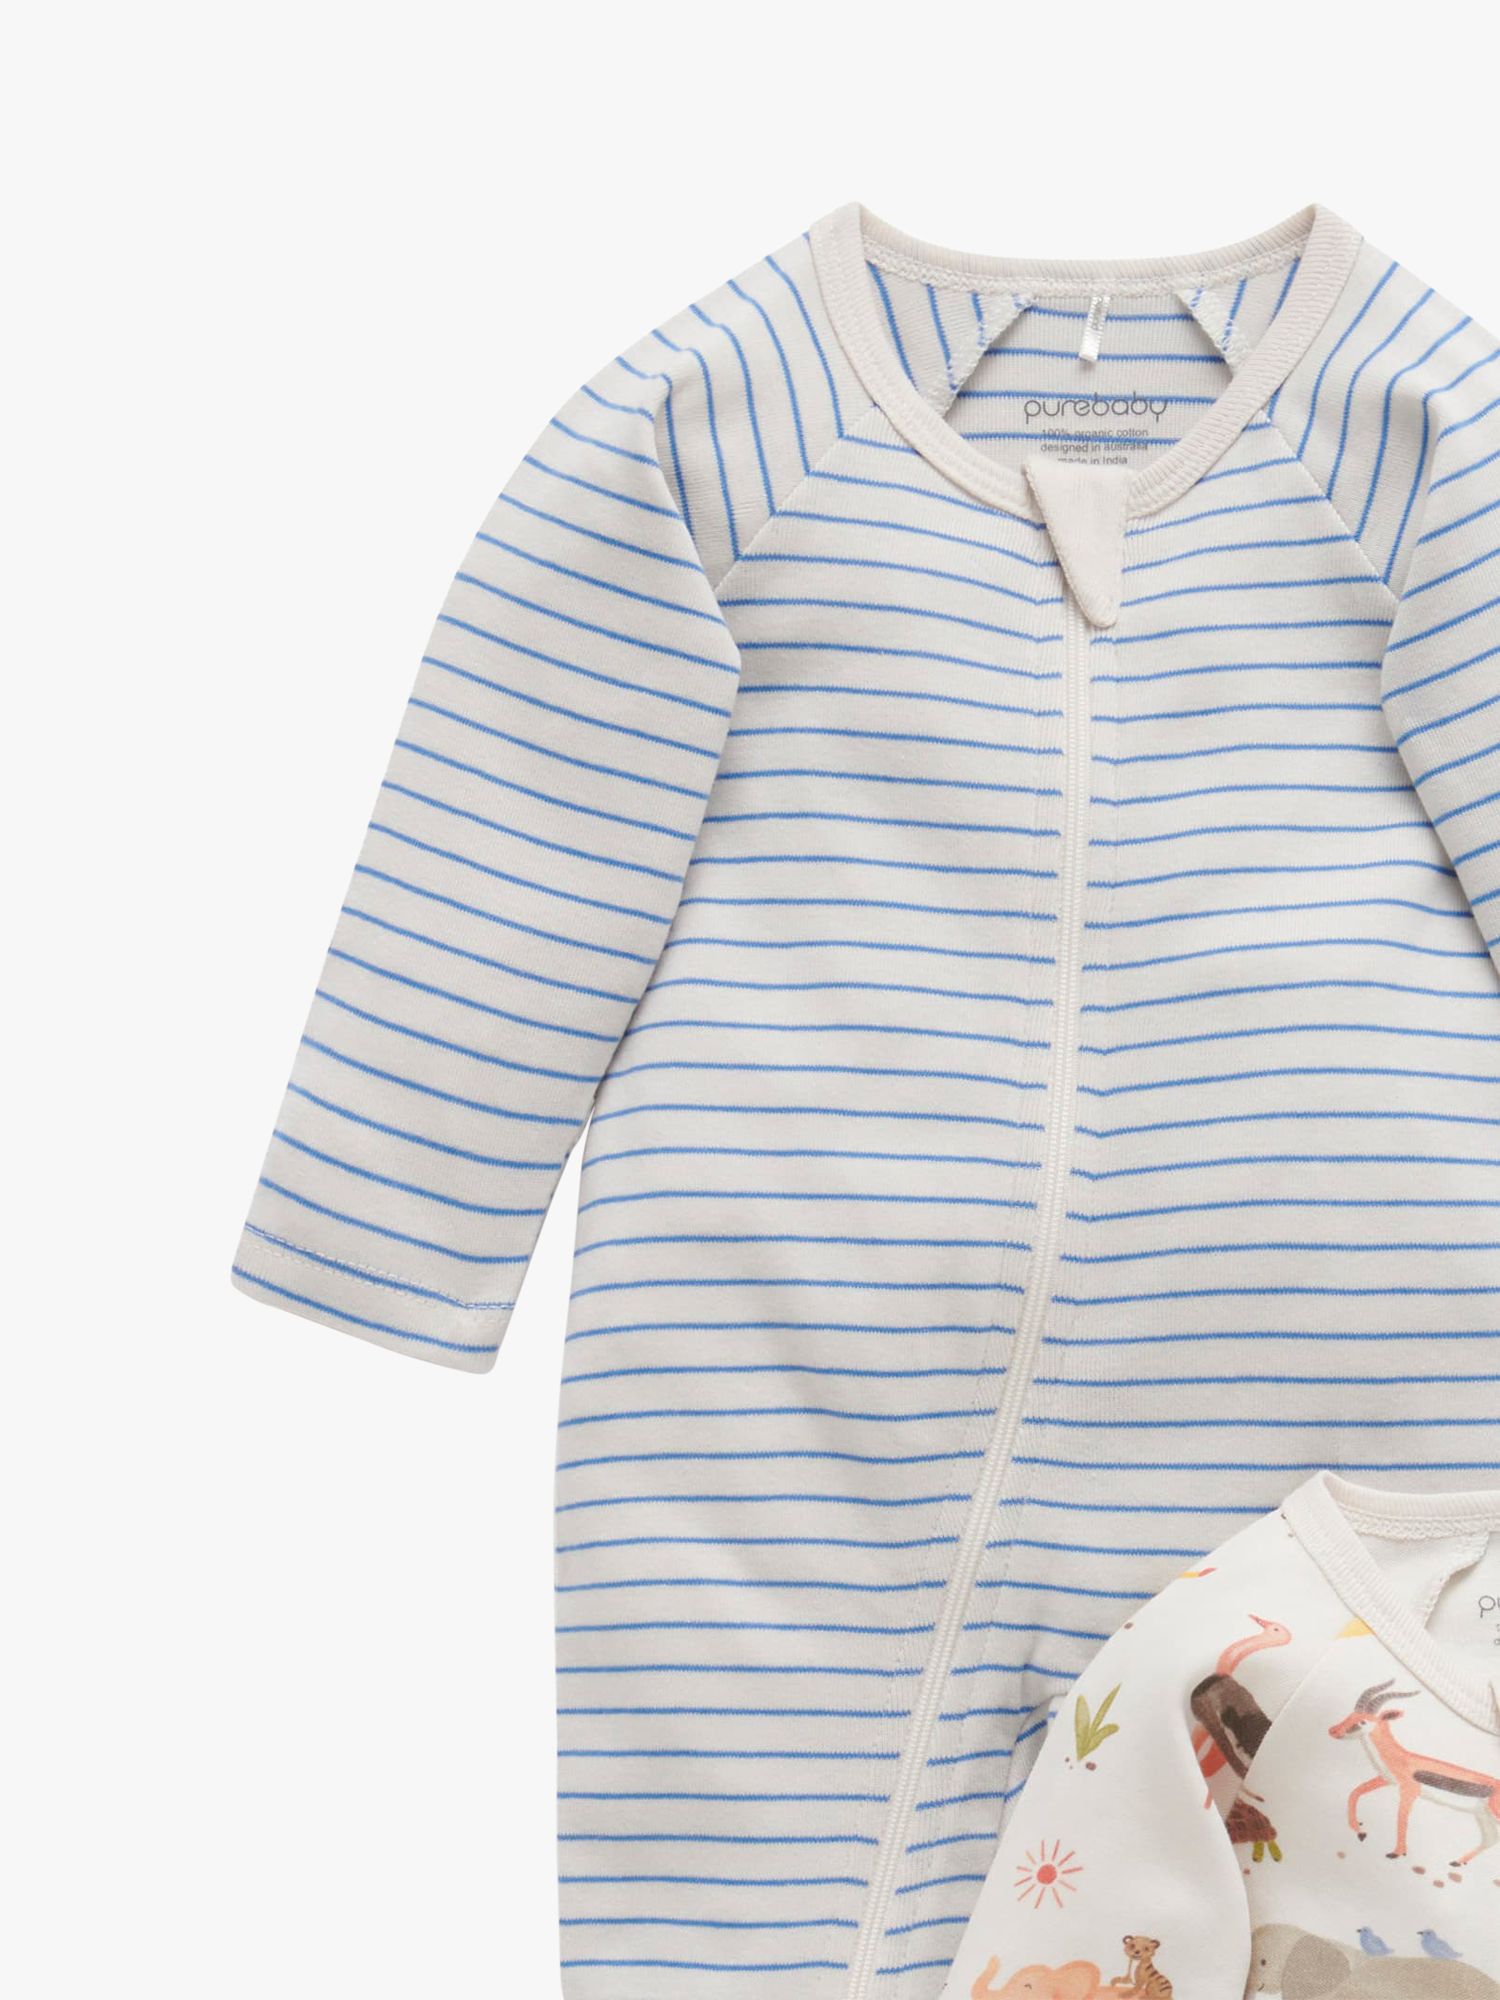 Purebaby Baby Organic Cotton Safari Print Growsuit, Pack of 2, Multi, Newborn